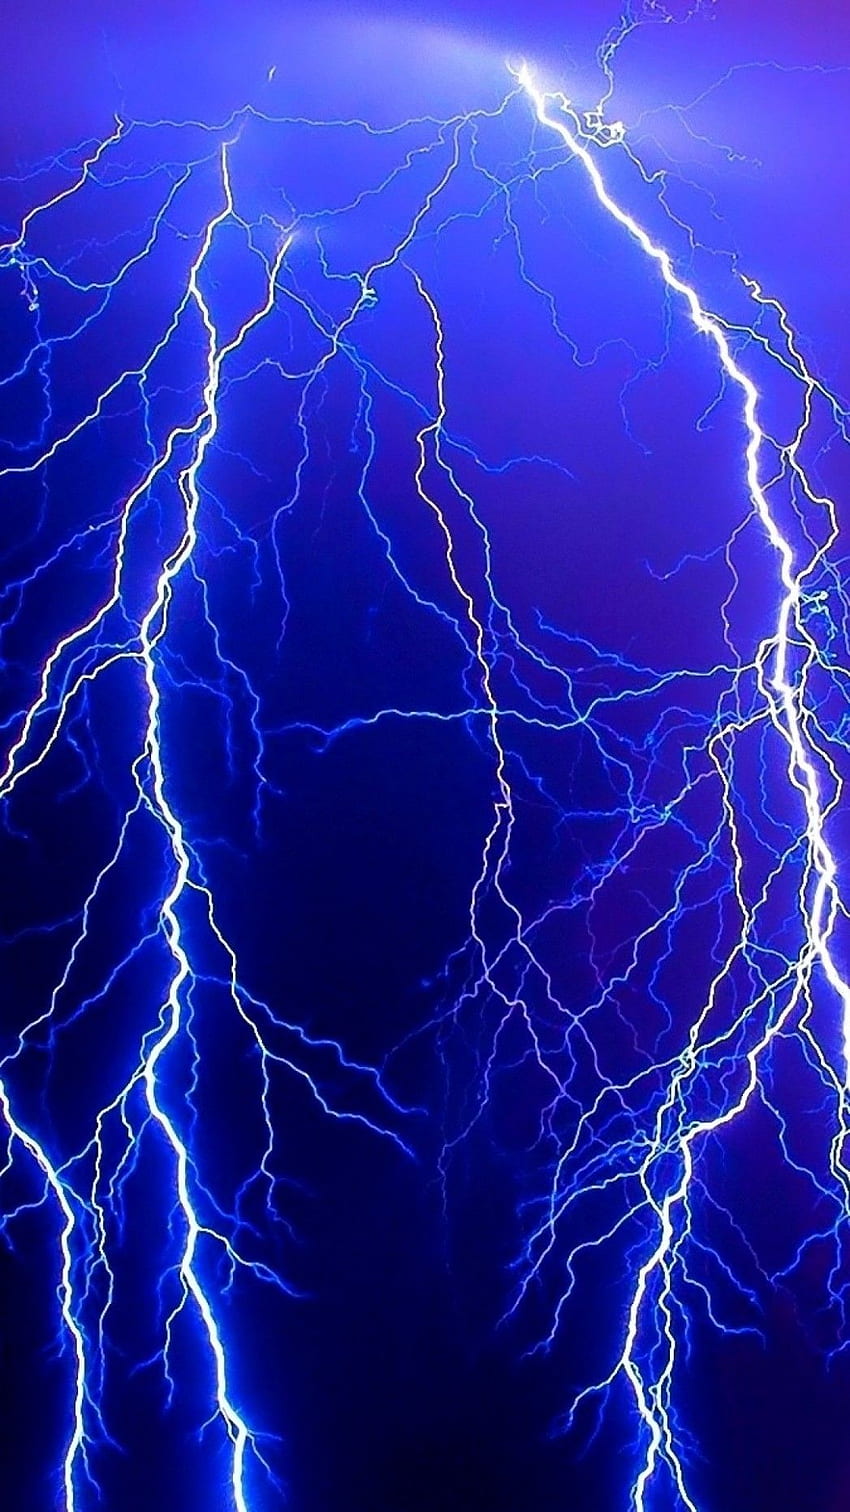 37687 Blue Lightning Bolt Images Stock Photos  Vectors  Shutterstock